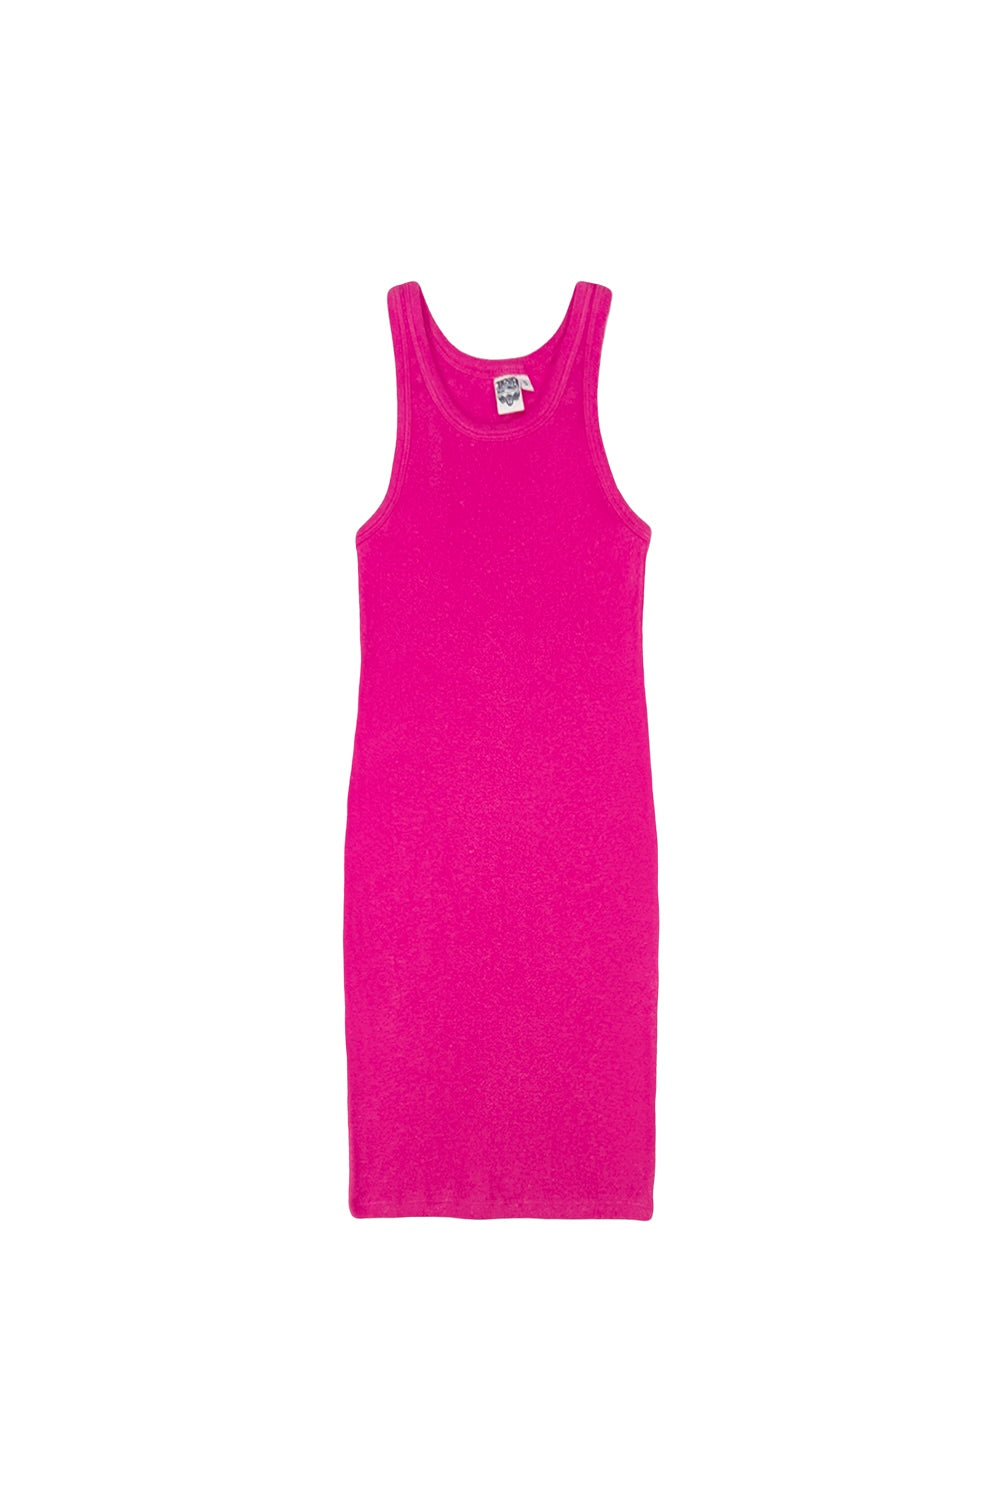 Daphne Dress | Jungmaven Hemp Clothing & Accessories / Color: Pink Grapefruit